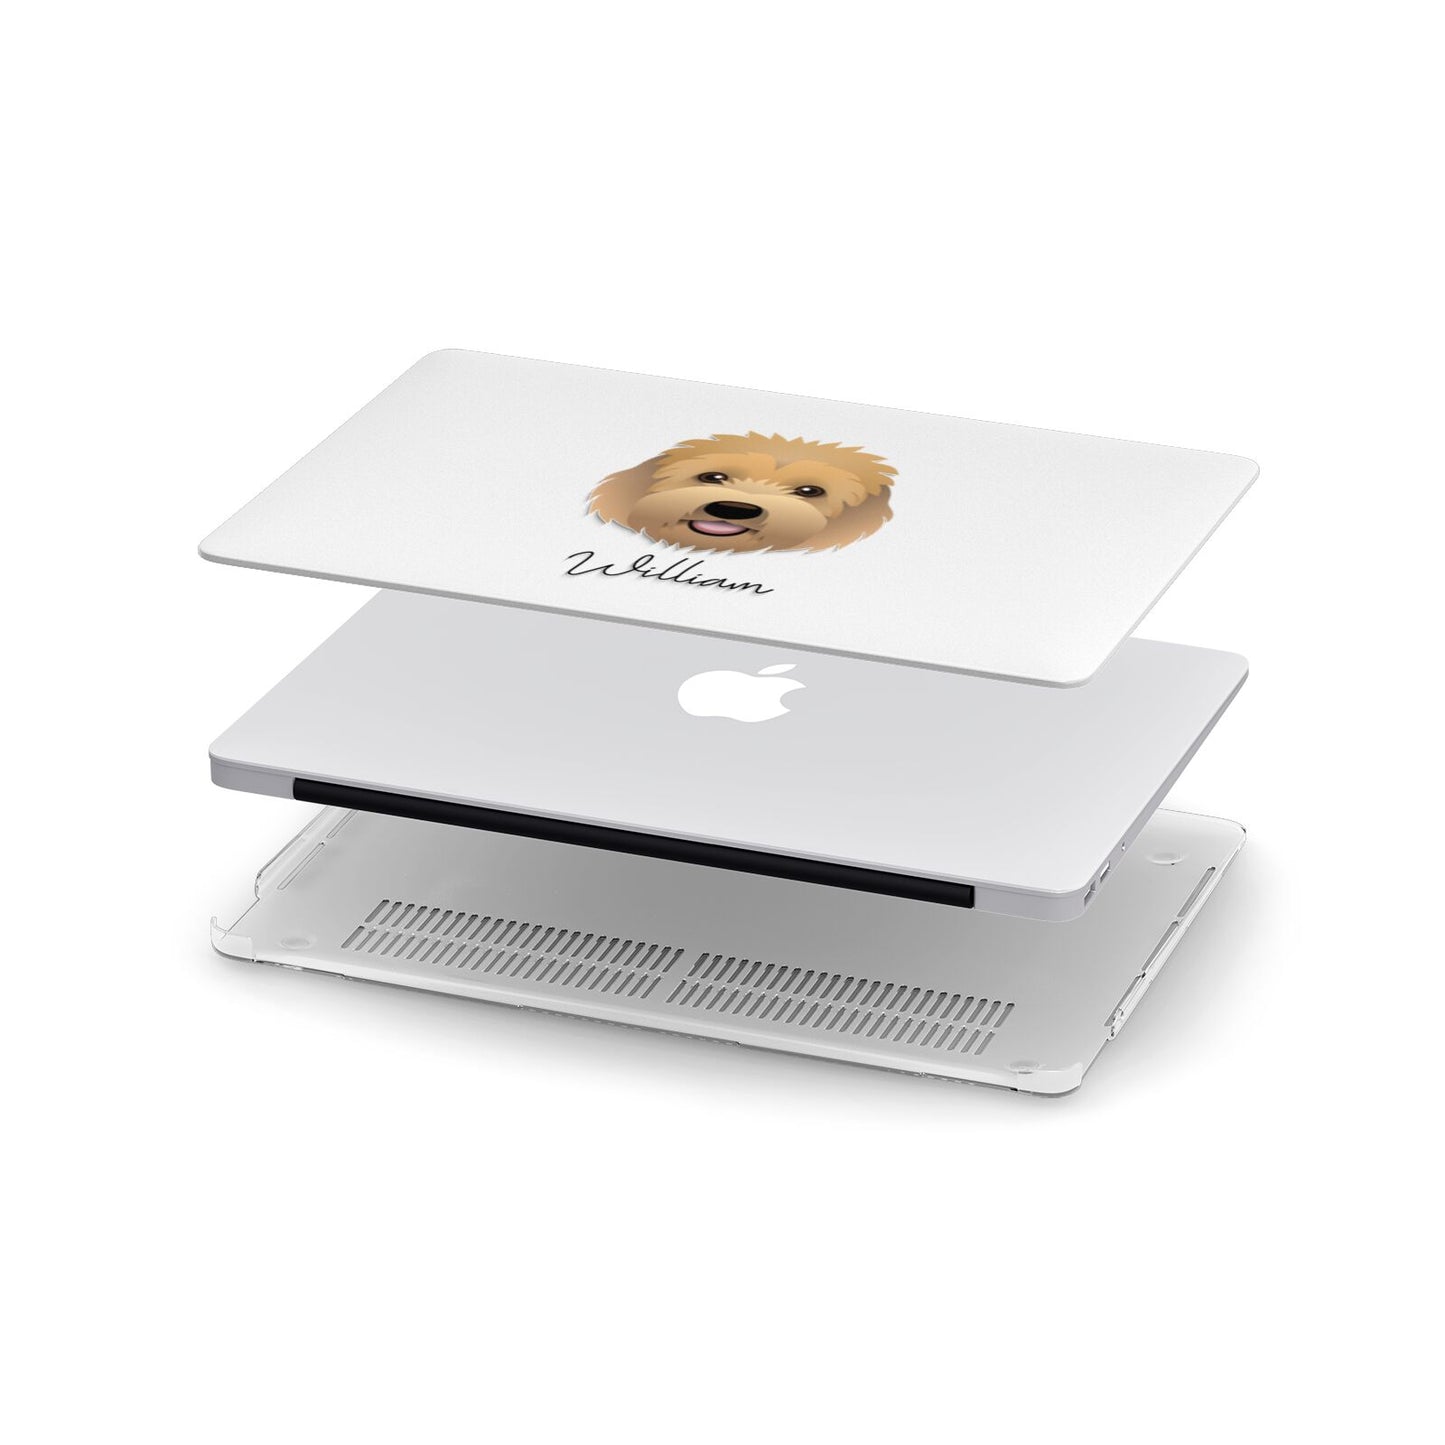 Goldendoodle Personalised Apple MacBook Case in Detail